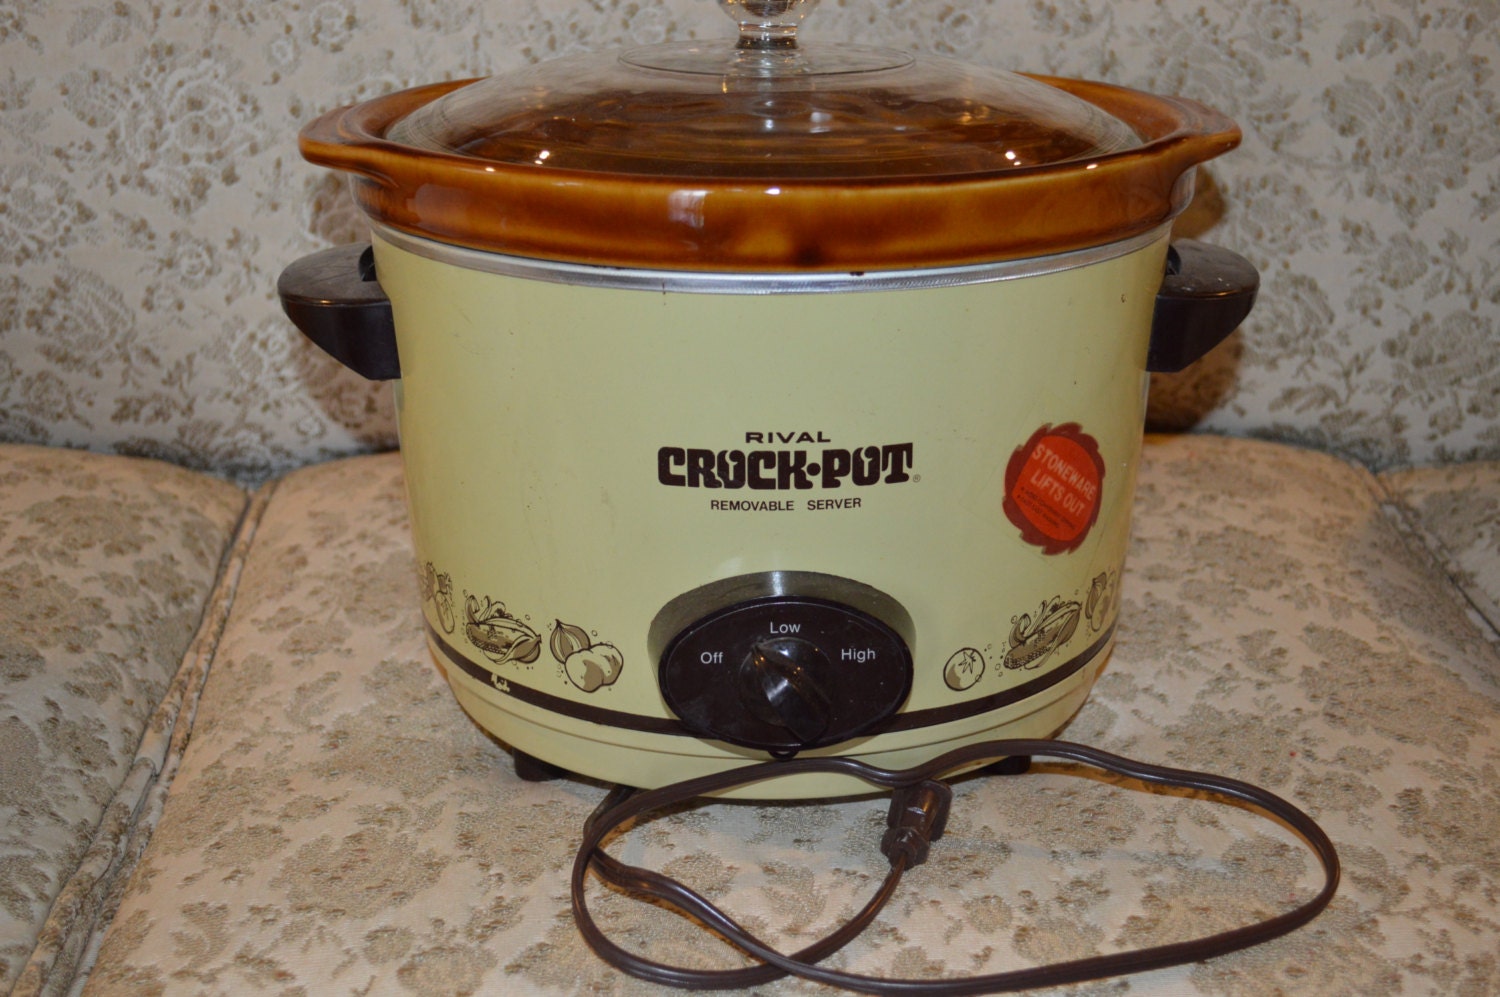  Rival 4 Quart Crock Pot  Sow Cooker Removable Stoneware Model